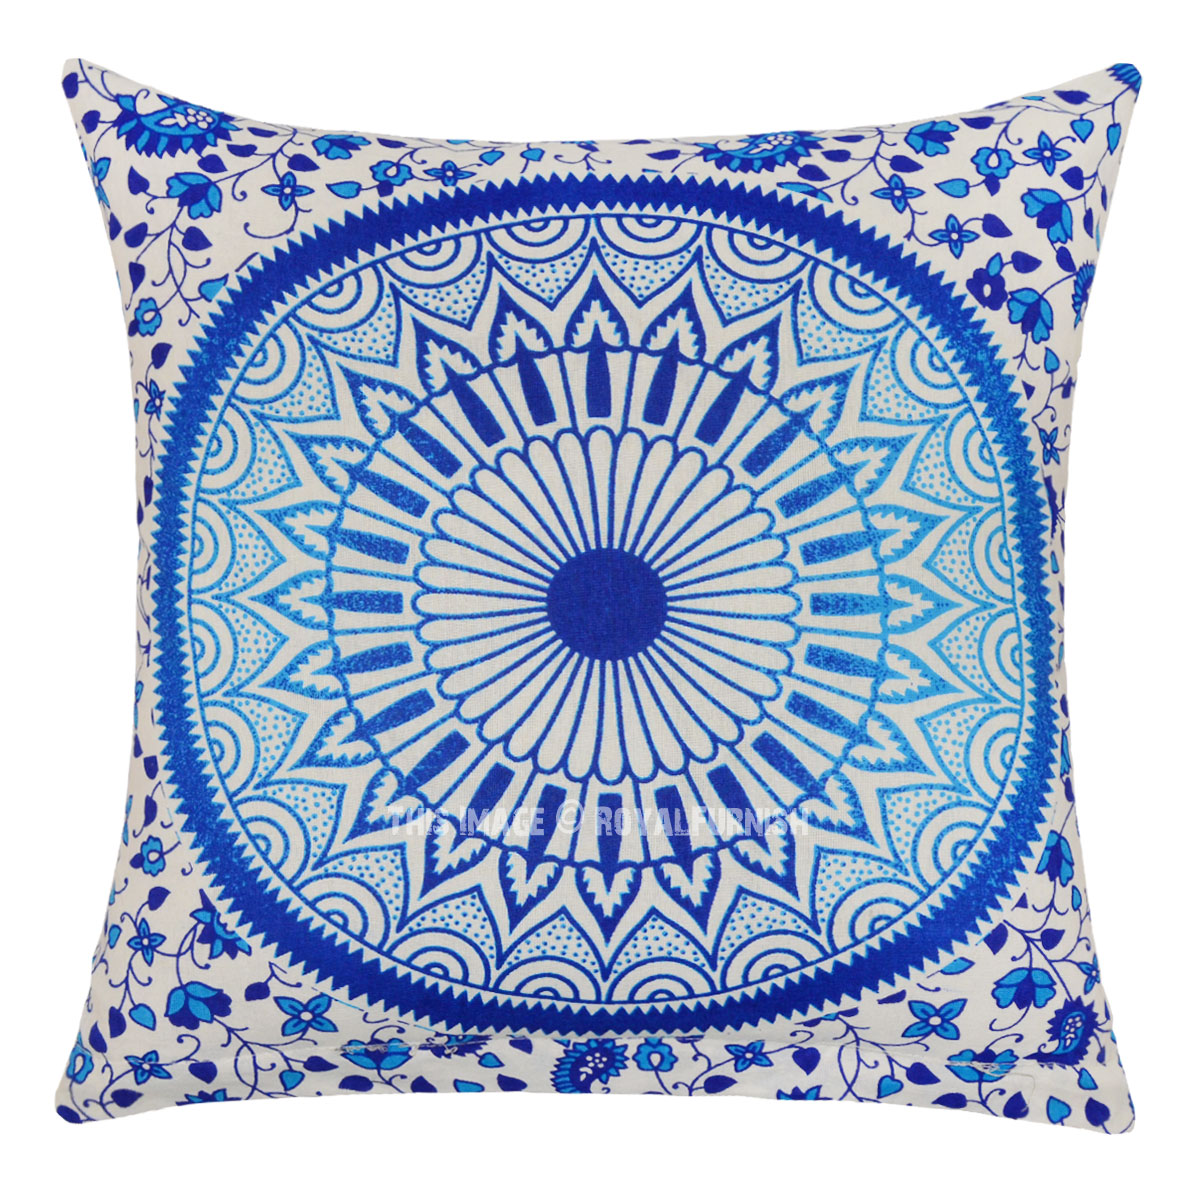 Decorative Blue Bohemian Throw Pillow Case 16X16 Inch - RoyalFurnish.com